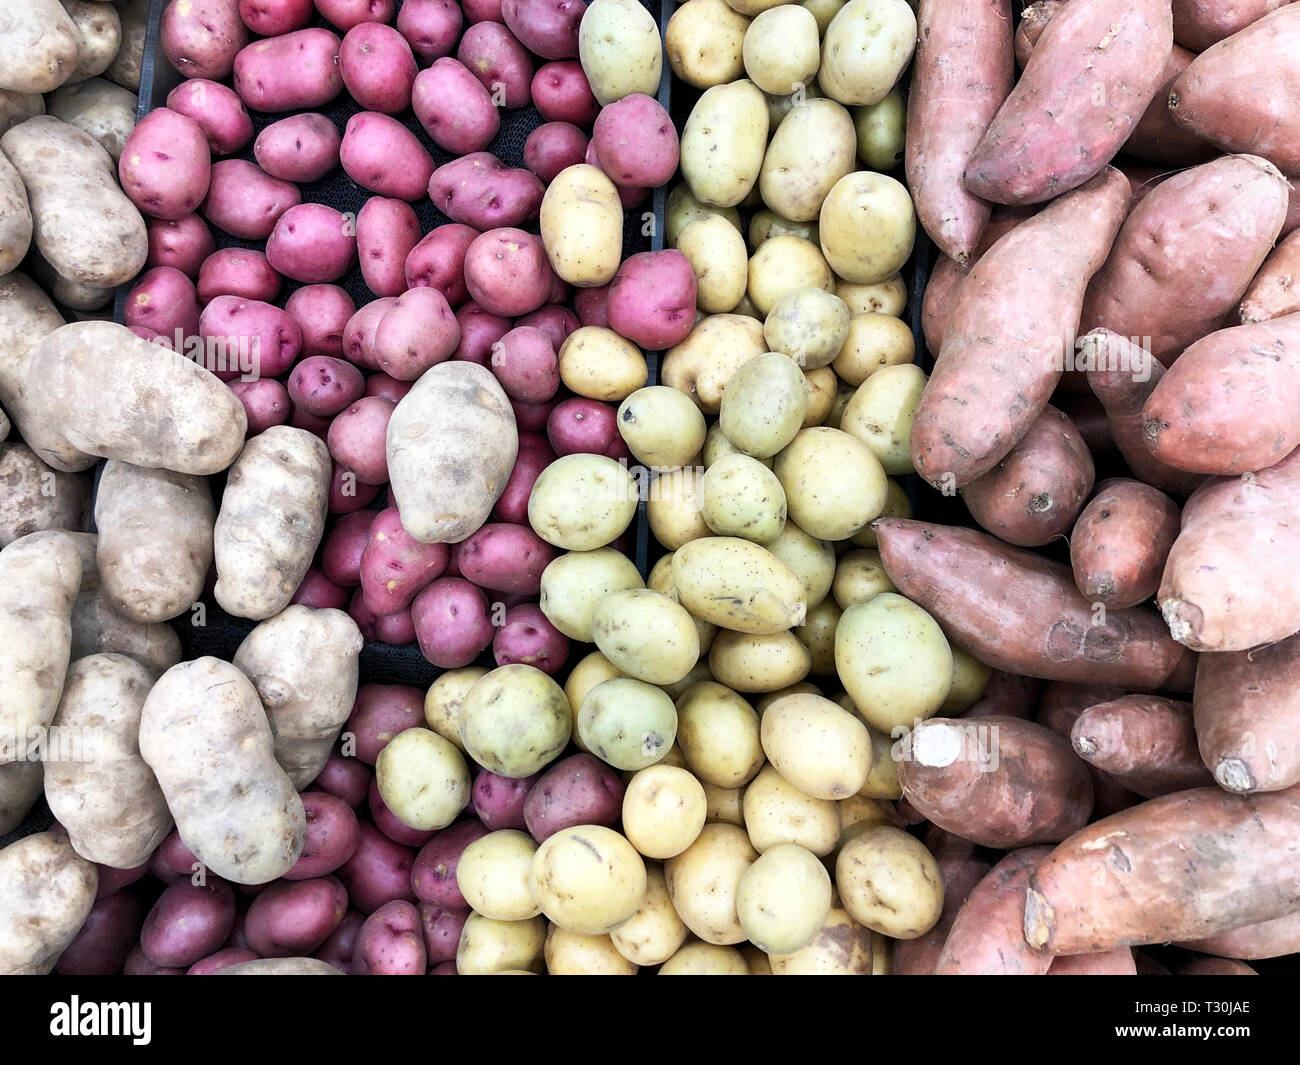 Several types of Potatoes make a Potato background Stock Photo